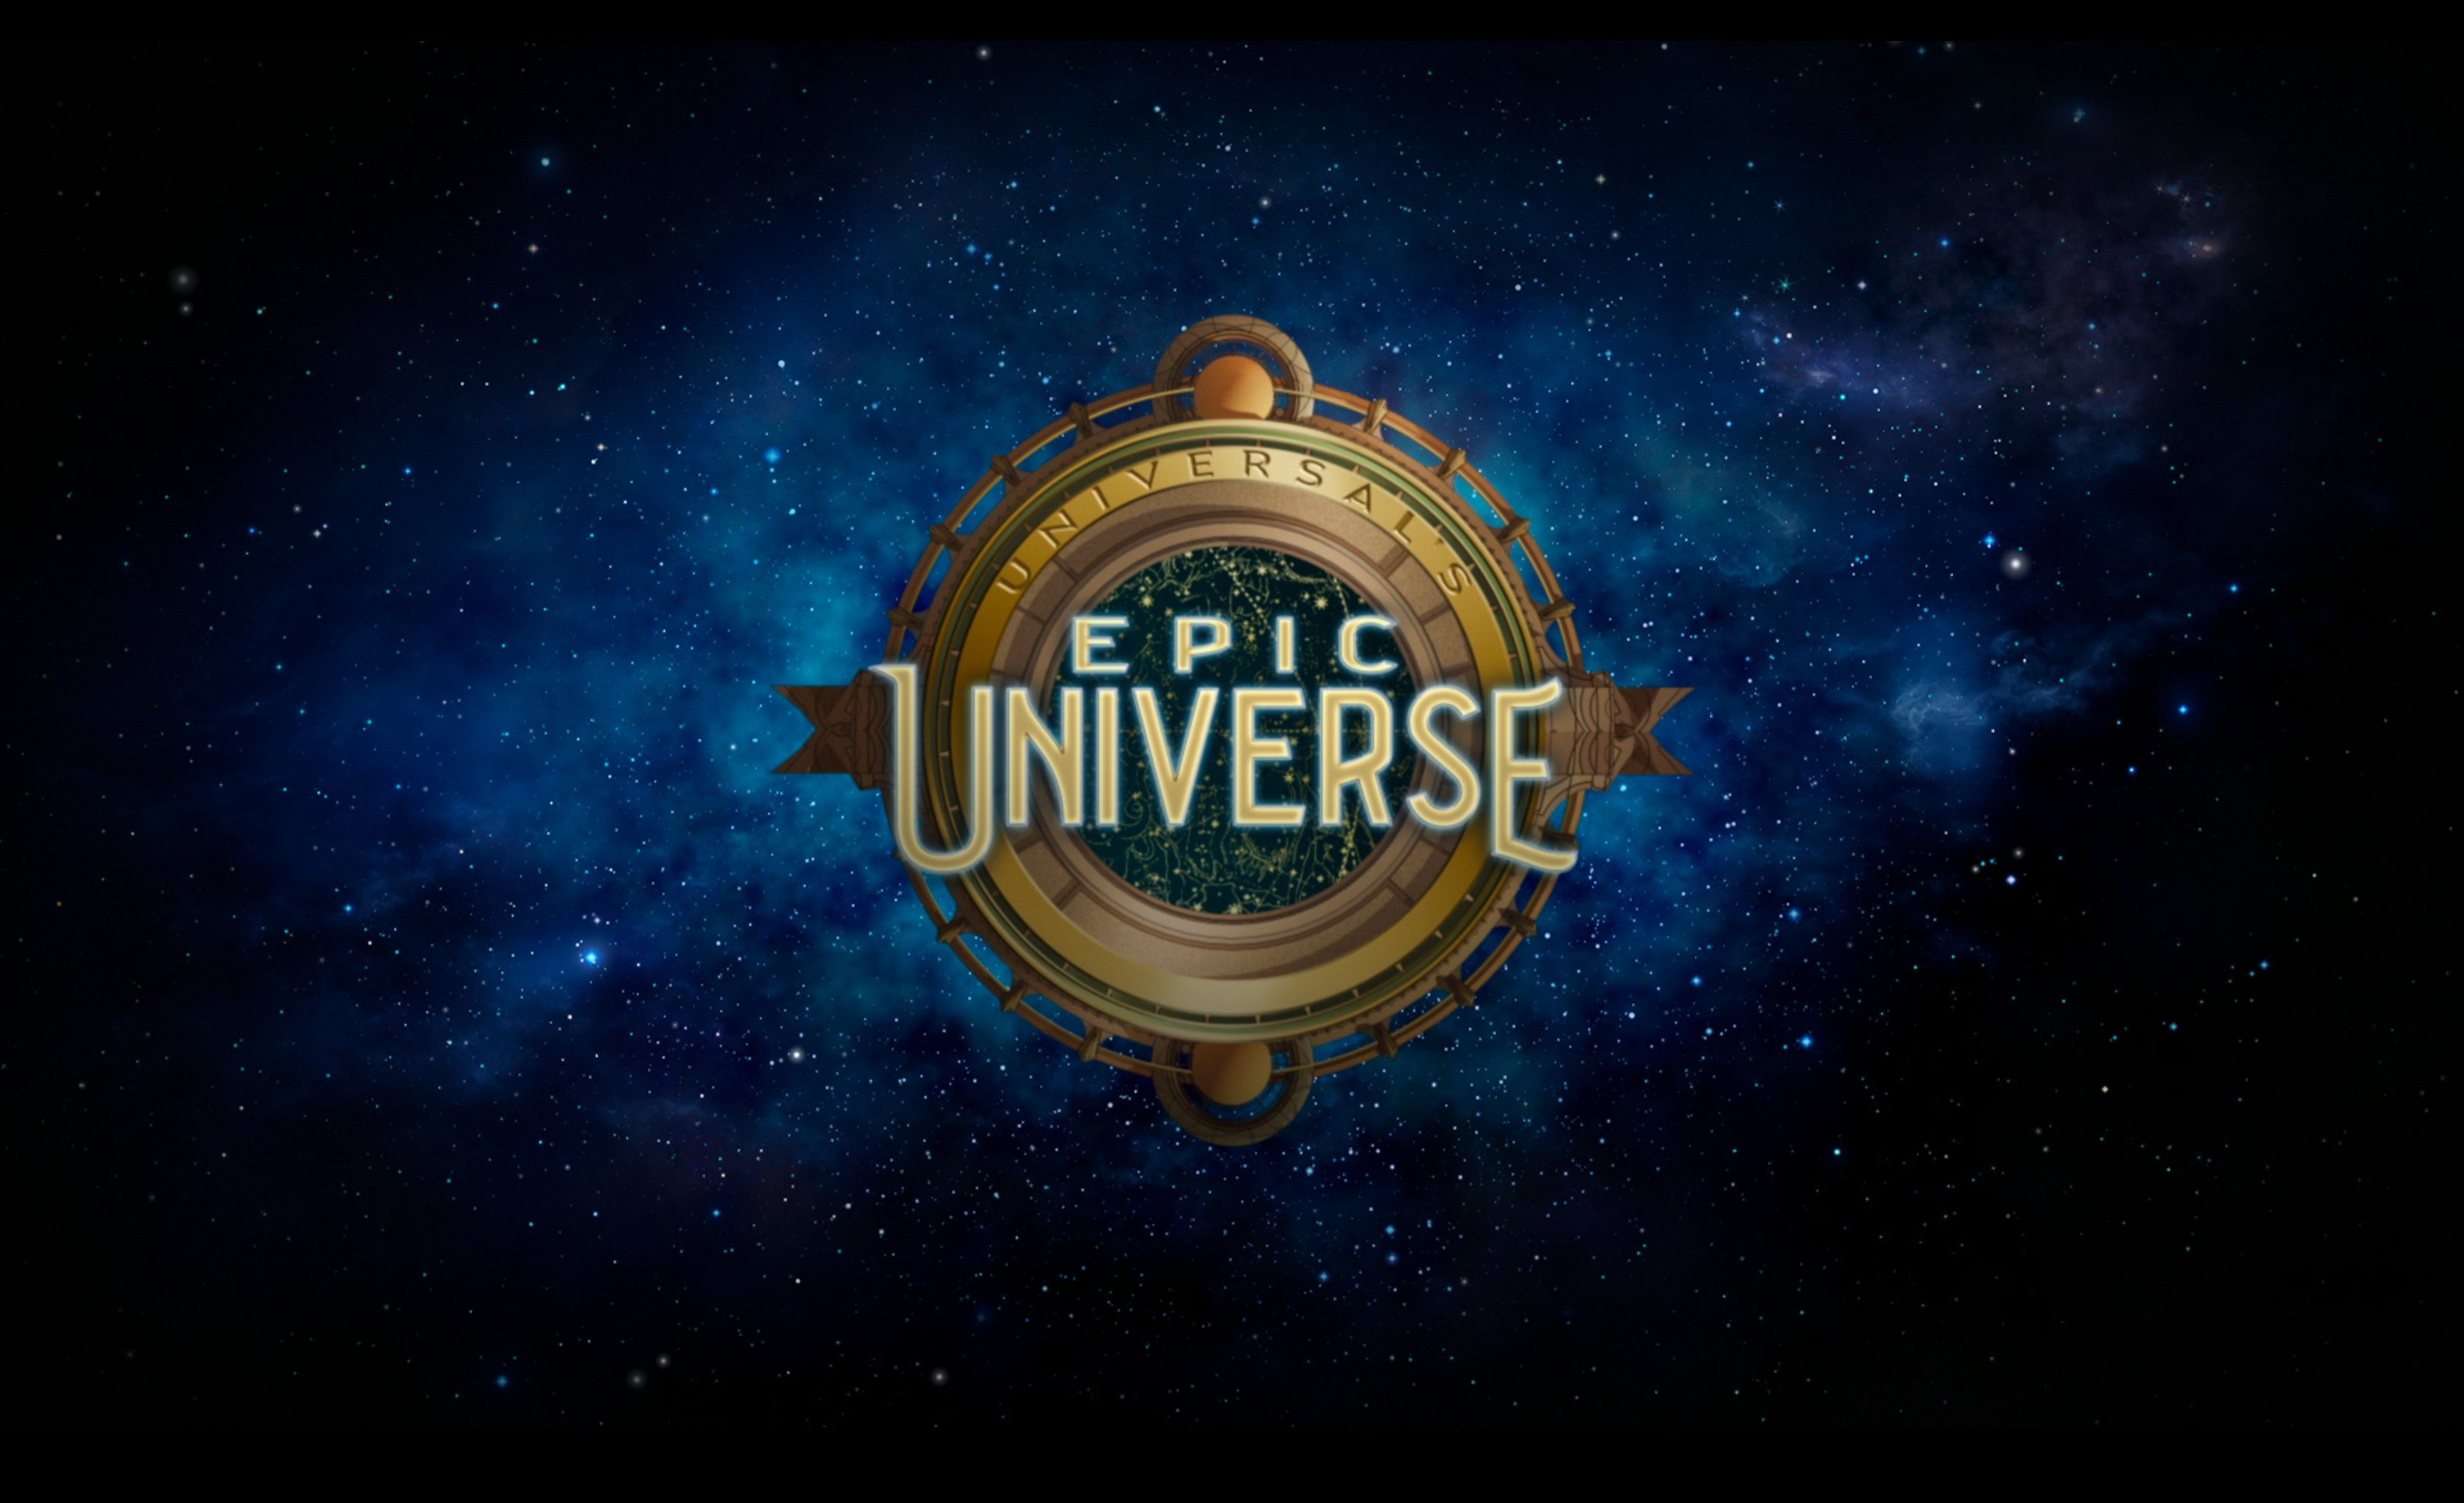 Epic Universe Universal Orlando logo